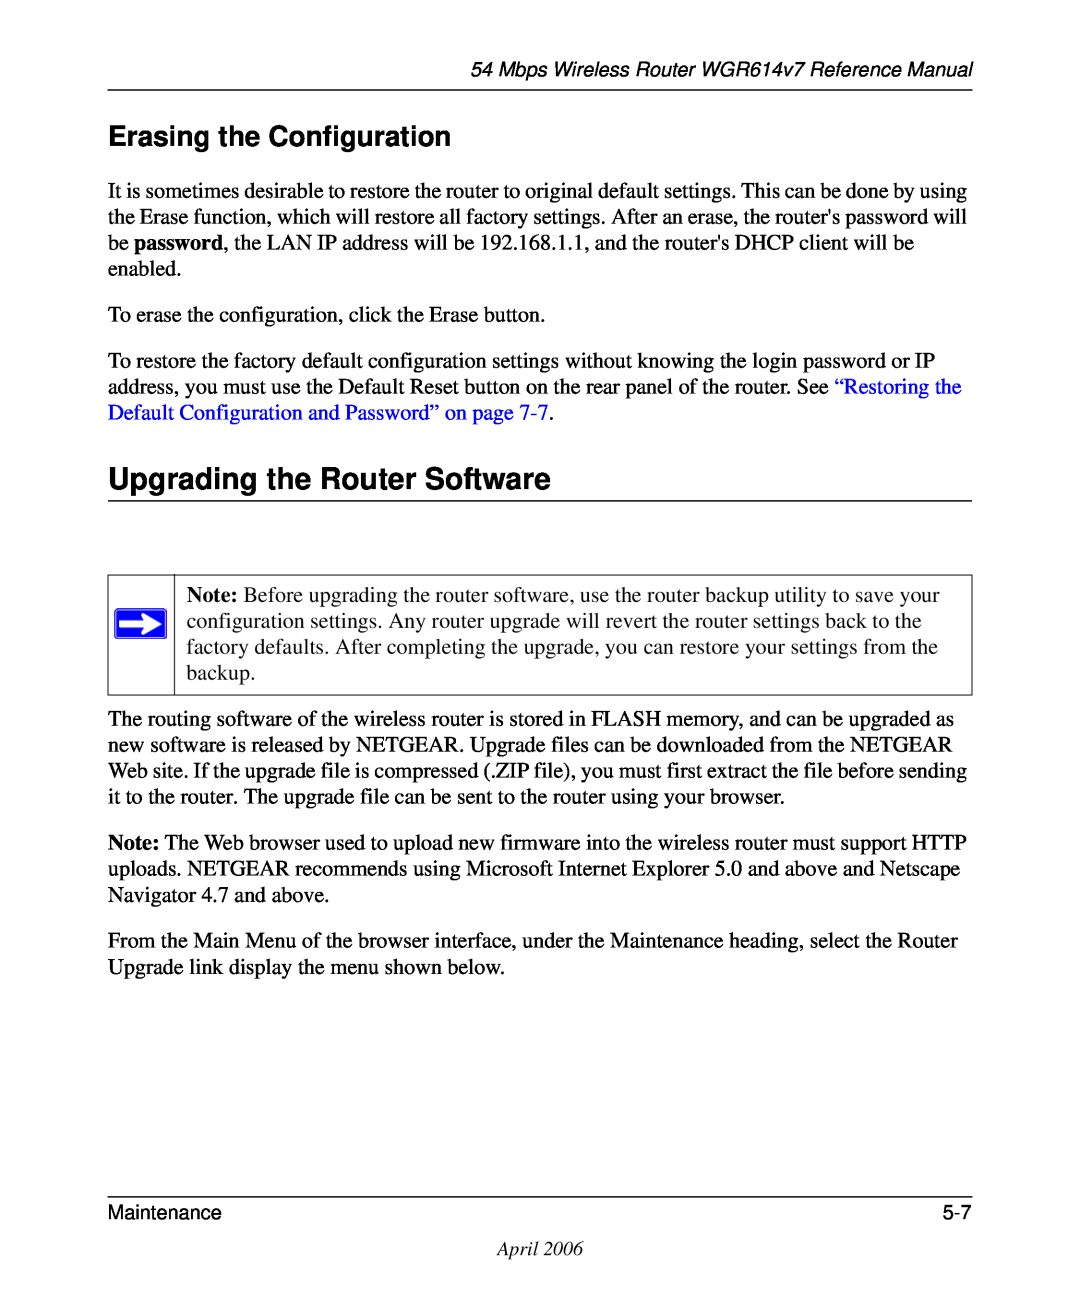 NETGEAR WGR614v7 manual Upgrading the Router Software, Erasing the Configuration 